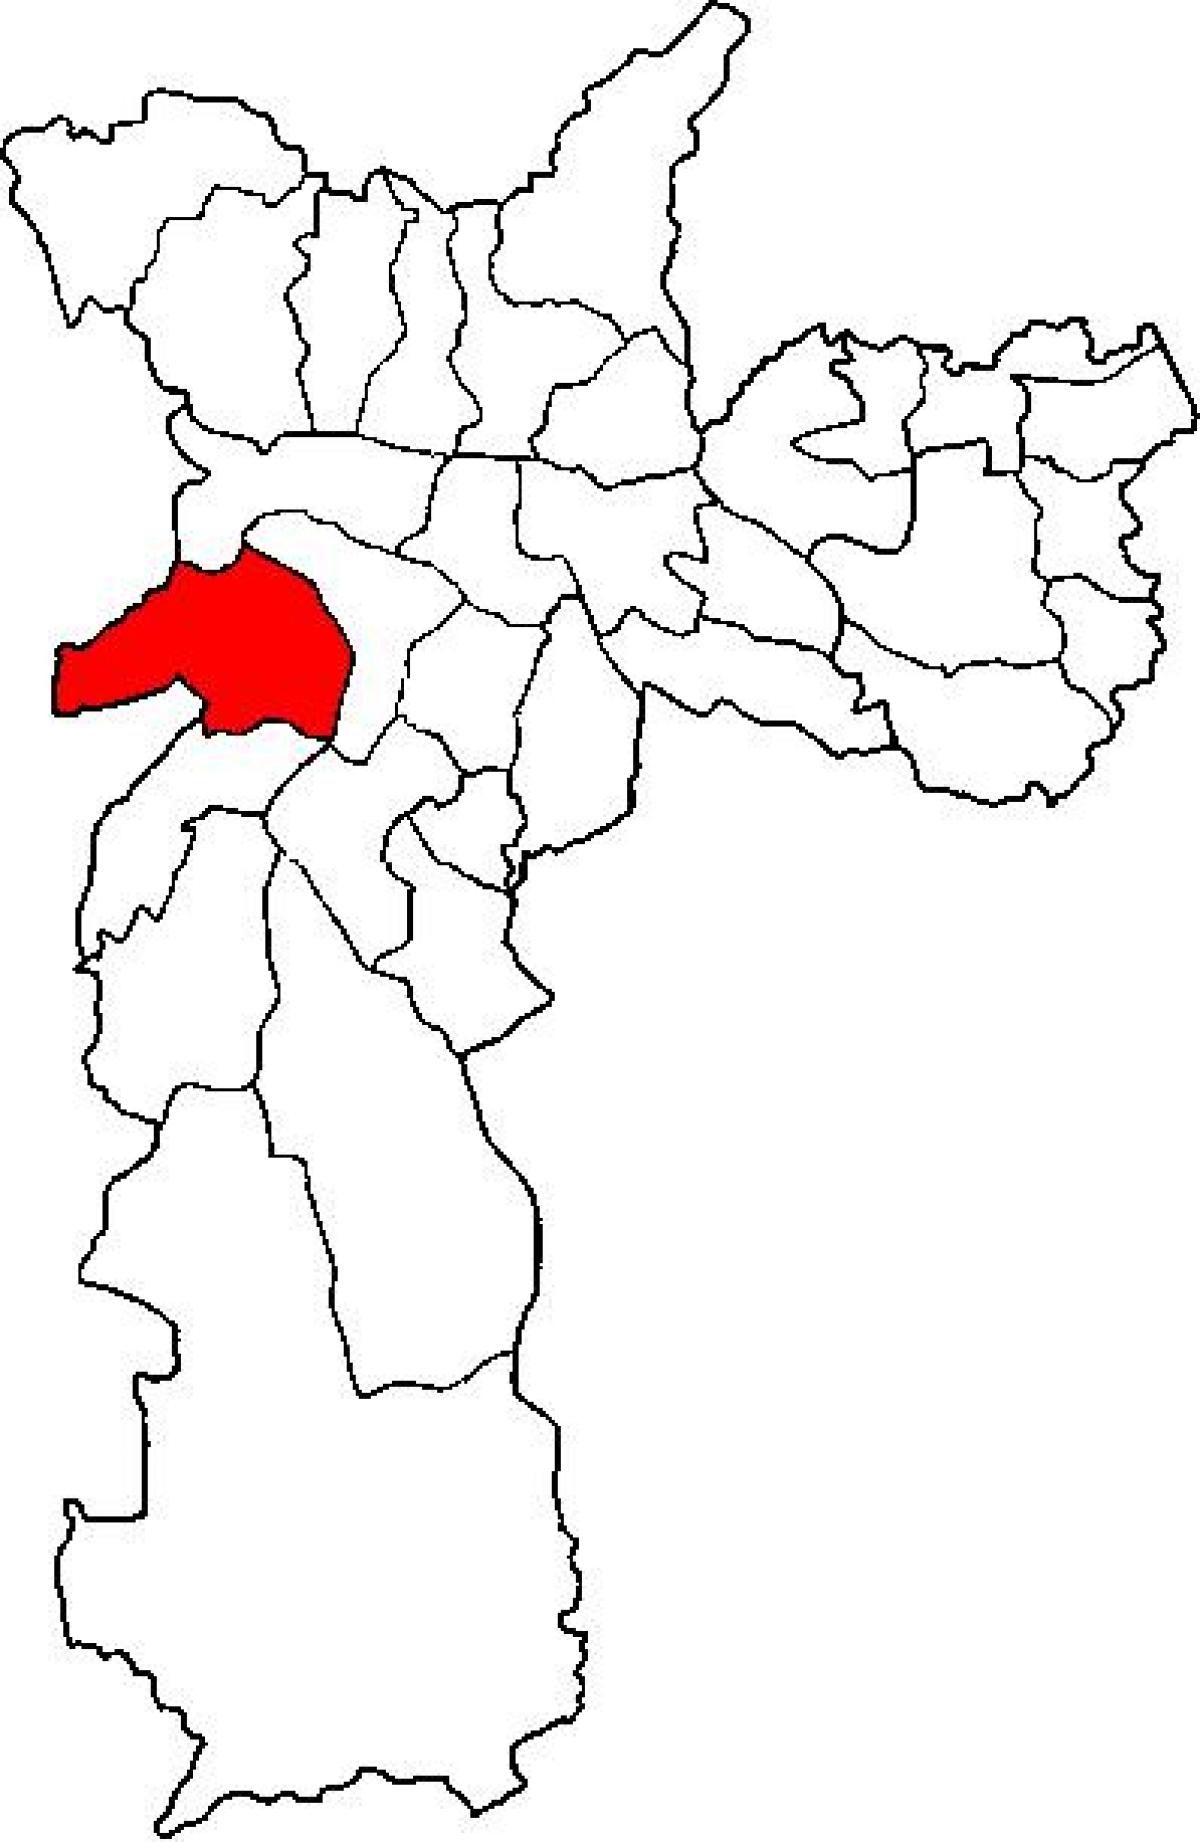 Butantã alt harita-vilayetin São Paulo